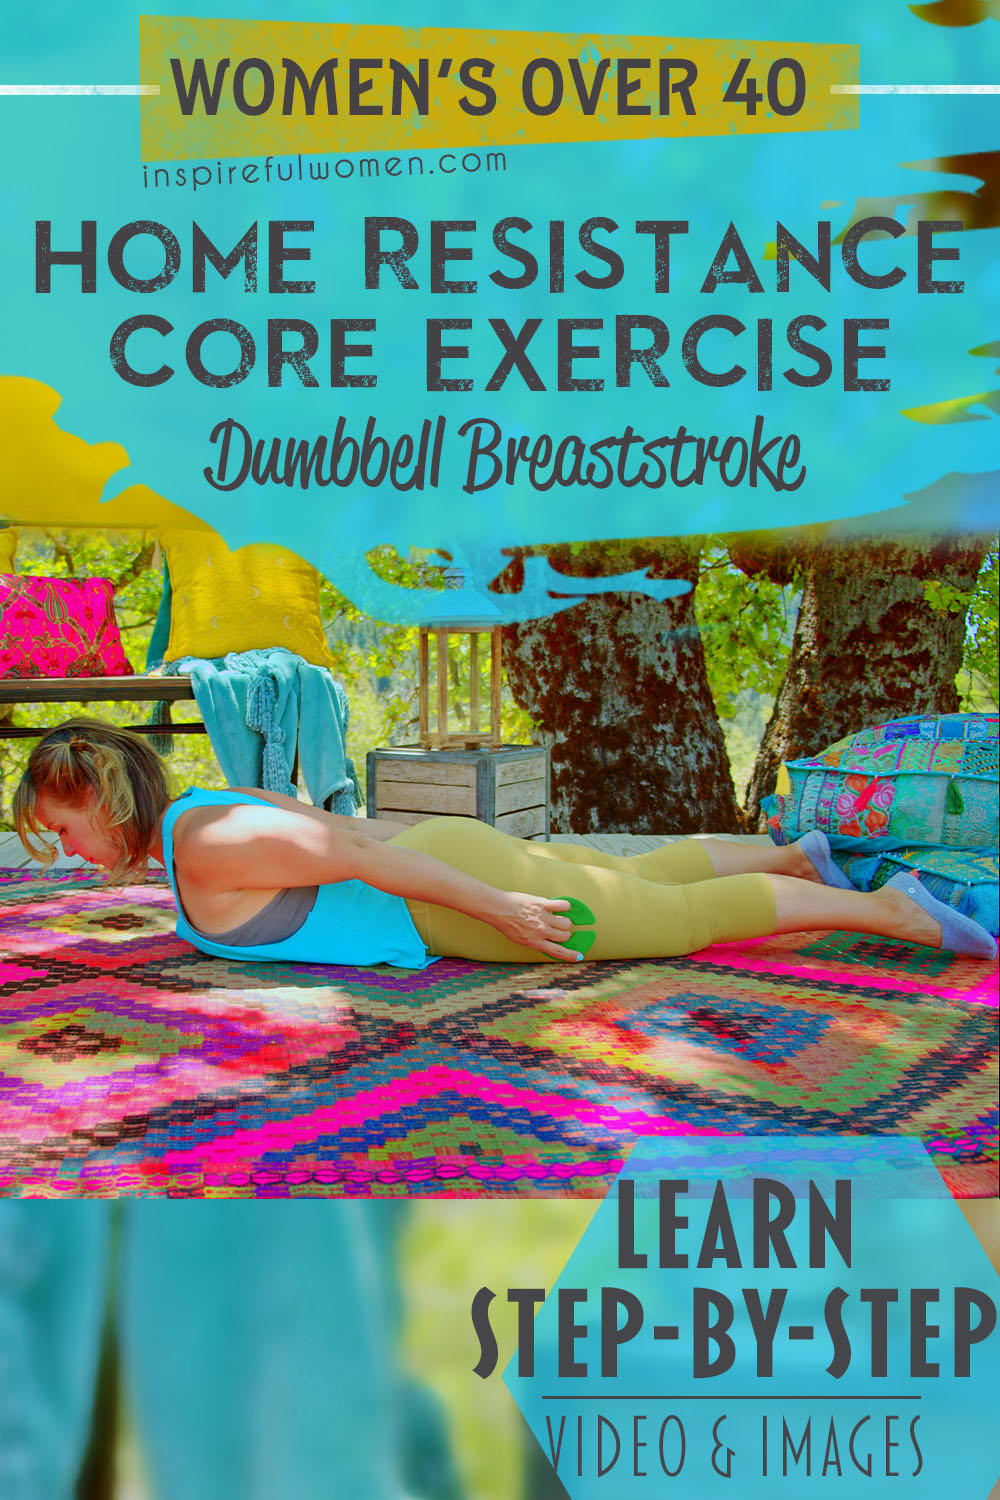 breaststroke-dumbbell-floor-pilates-core-exercise-thoracic-erector-spinae-women-40+